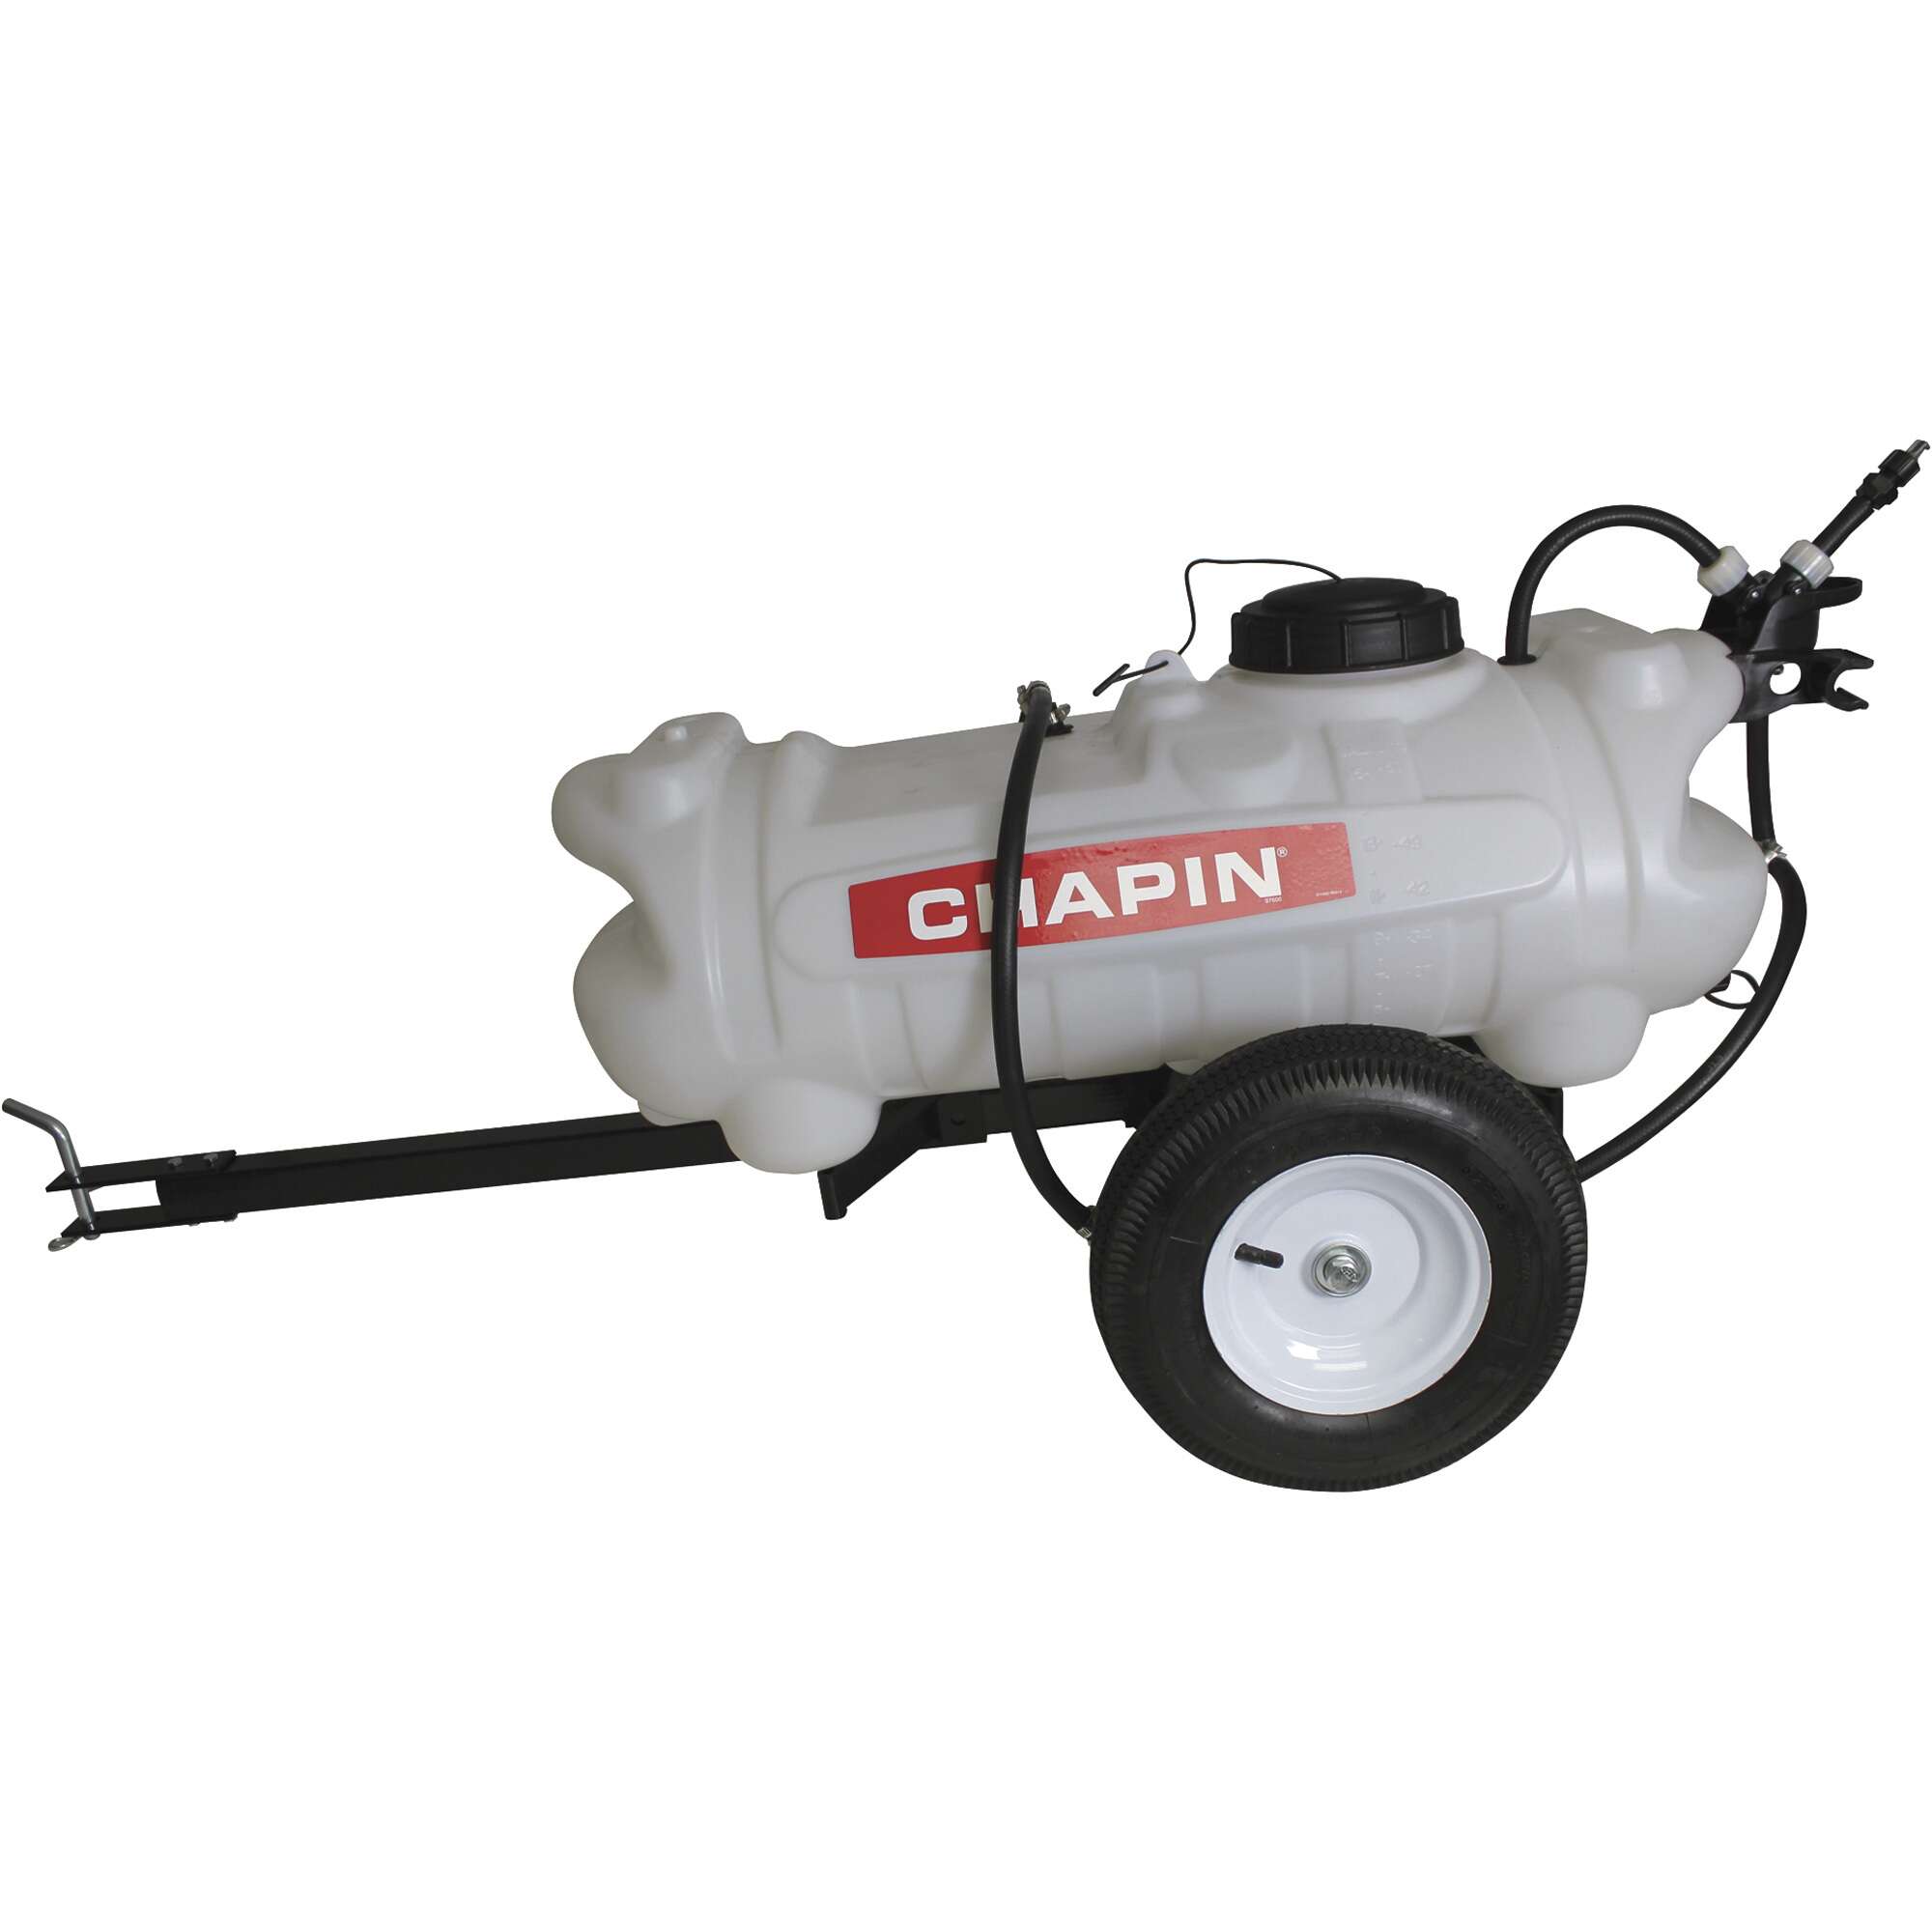 Chapin Ground Driven Tow Behind Trailer Sprayer 15Gallon Capacity 40 PSI